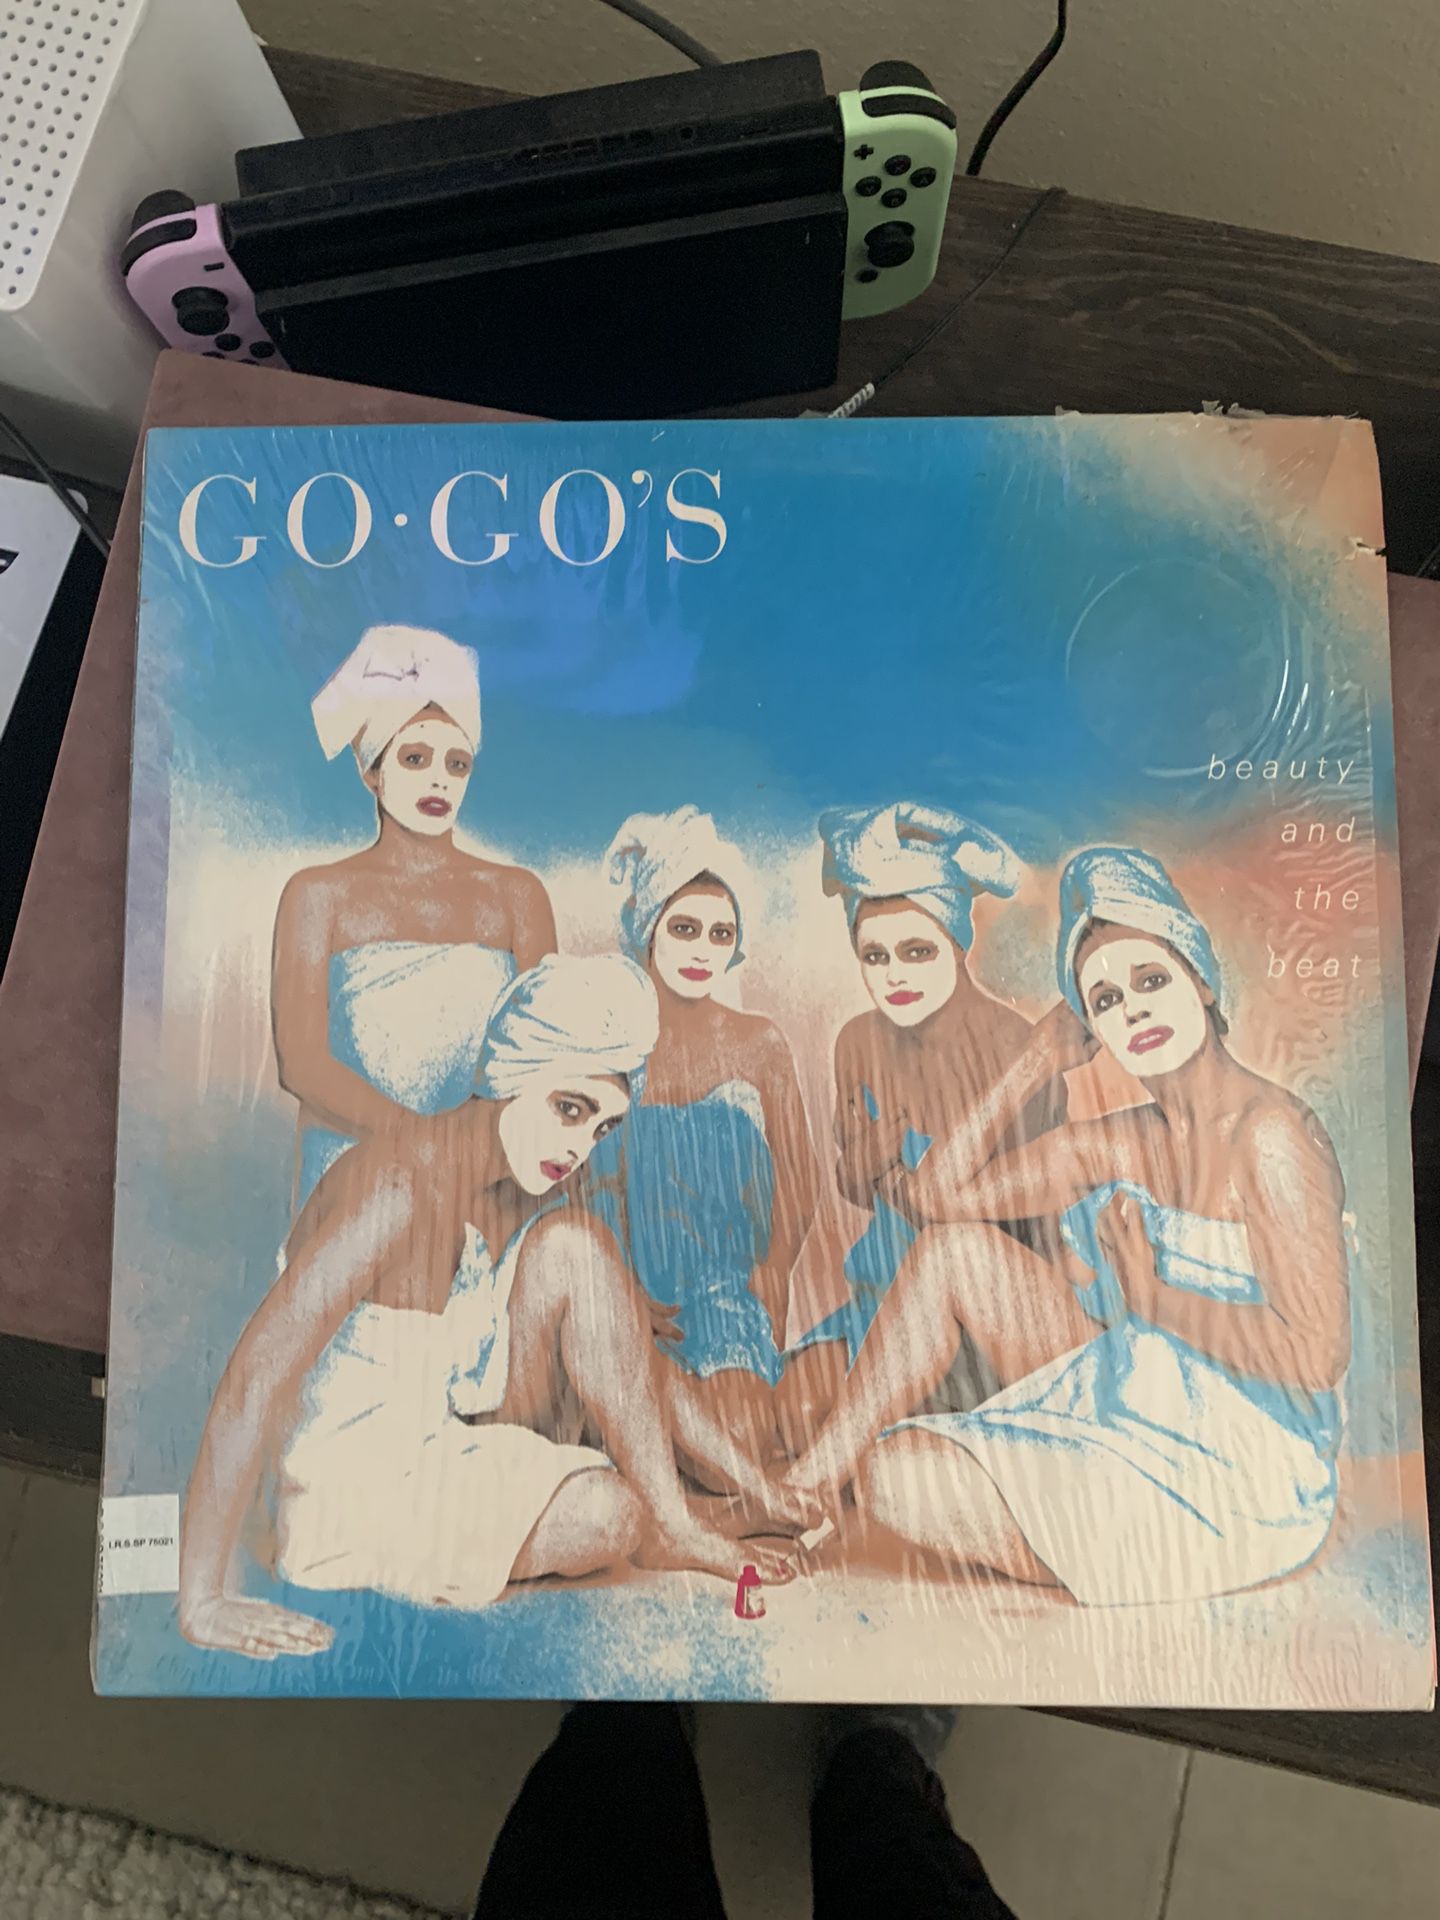 Gogos Beauty And The Beat Vinyl $13 